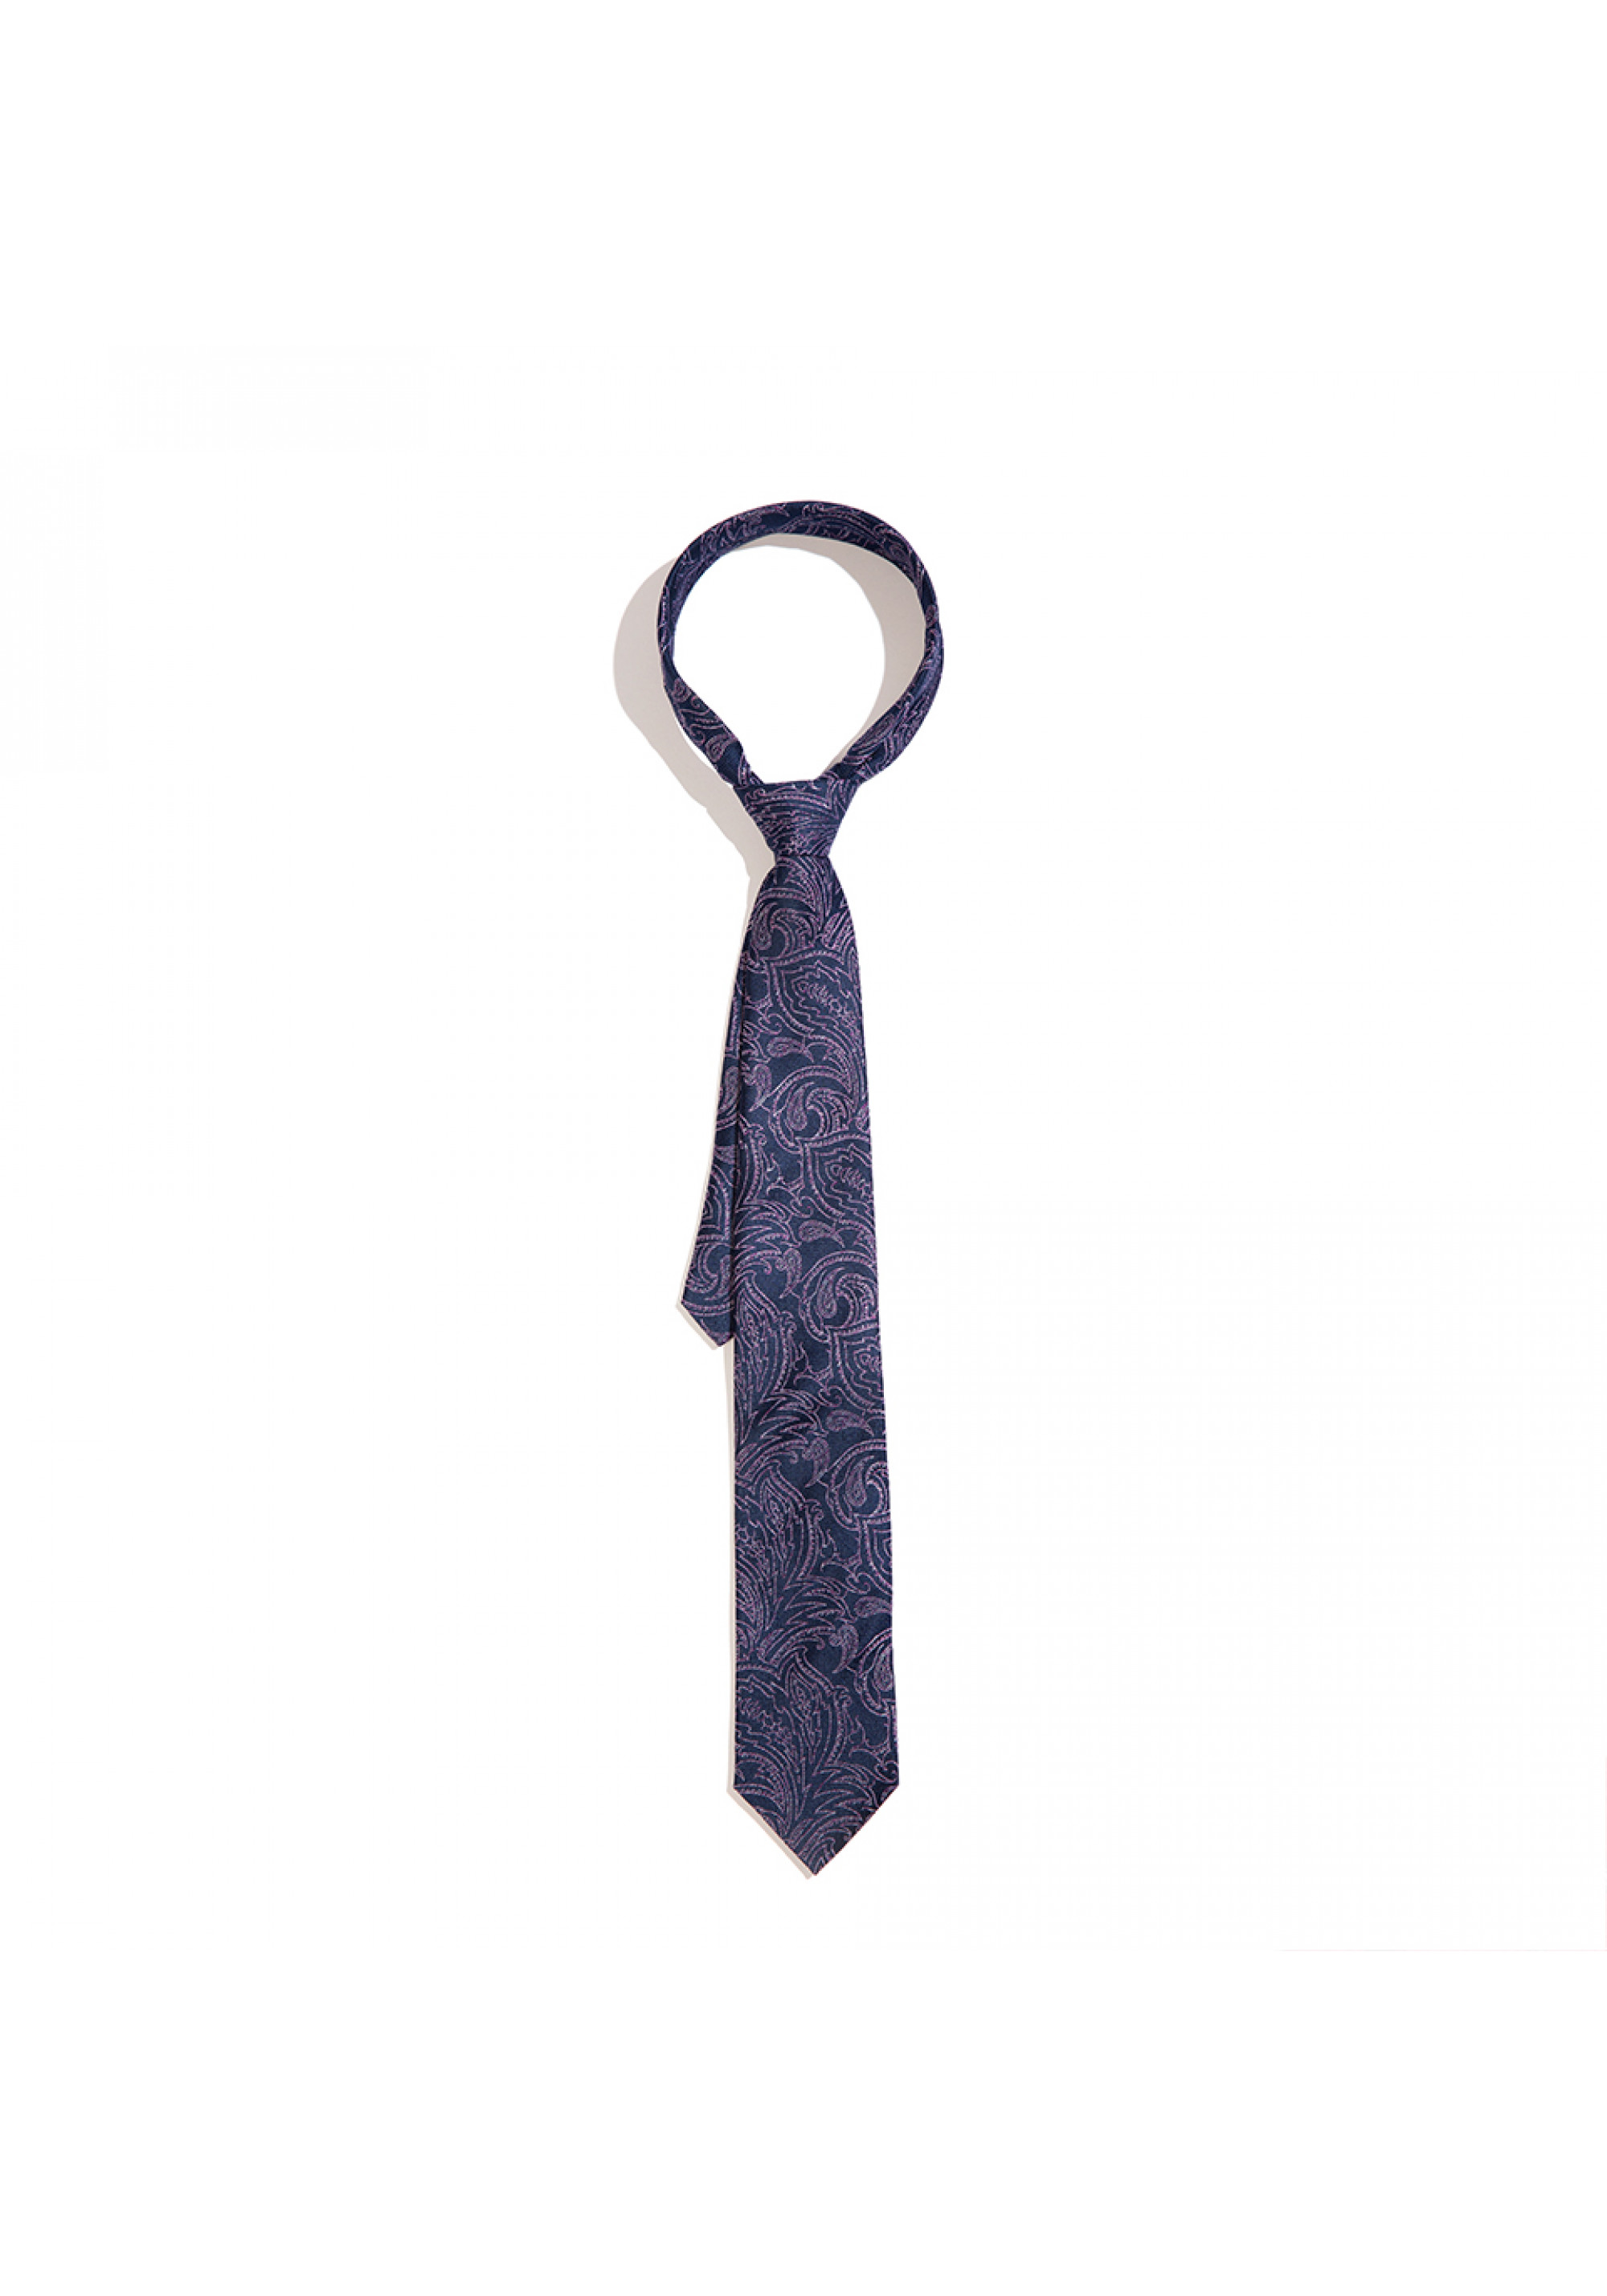 Cravata purple paisley